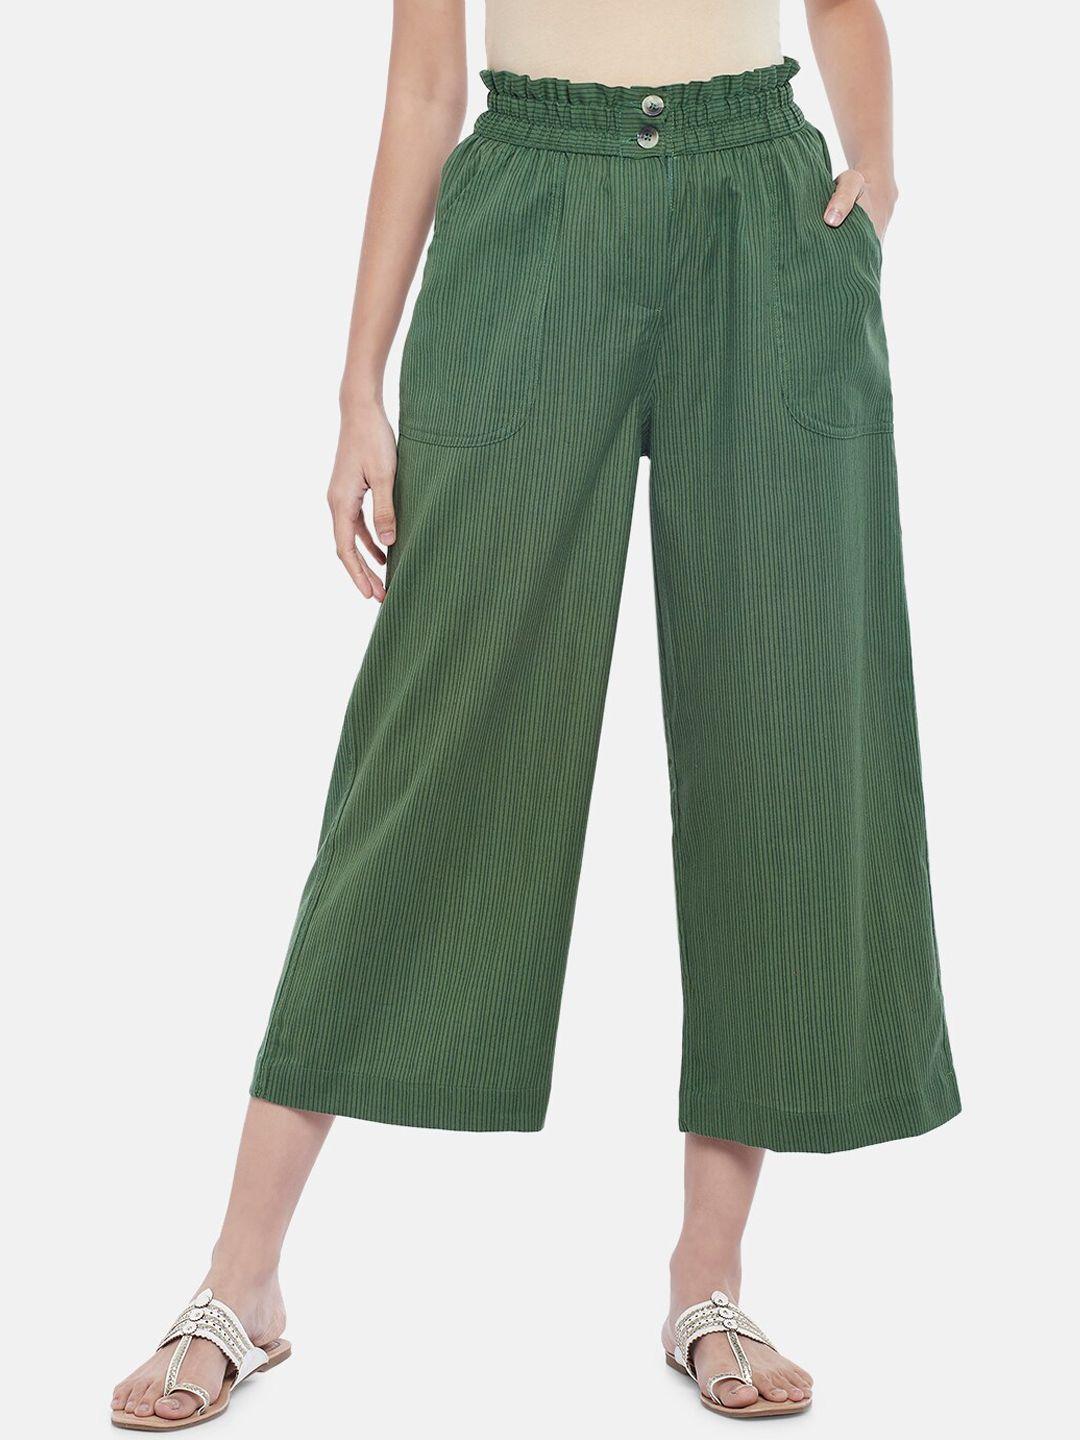 akkriti by pantaloons women olive green culottes trousers